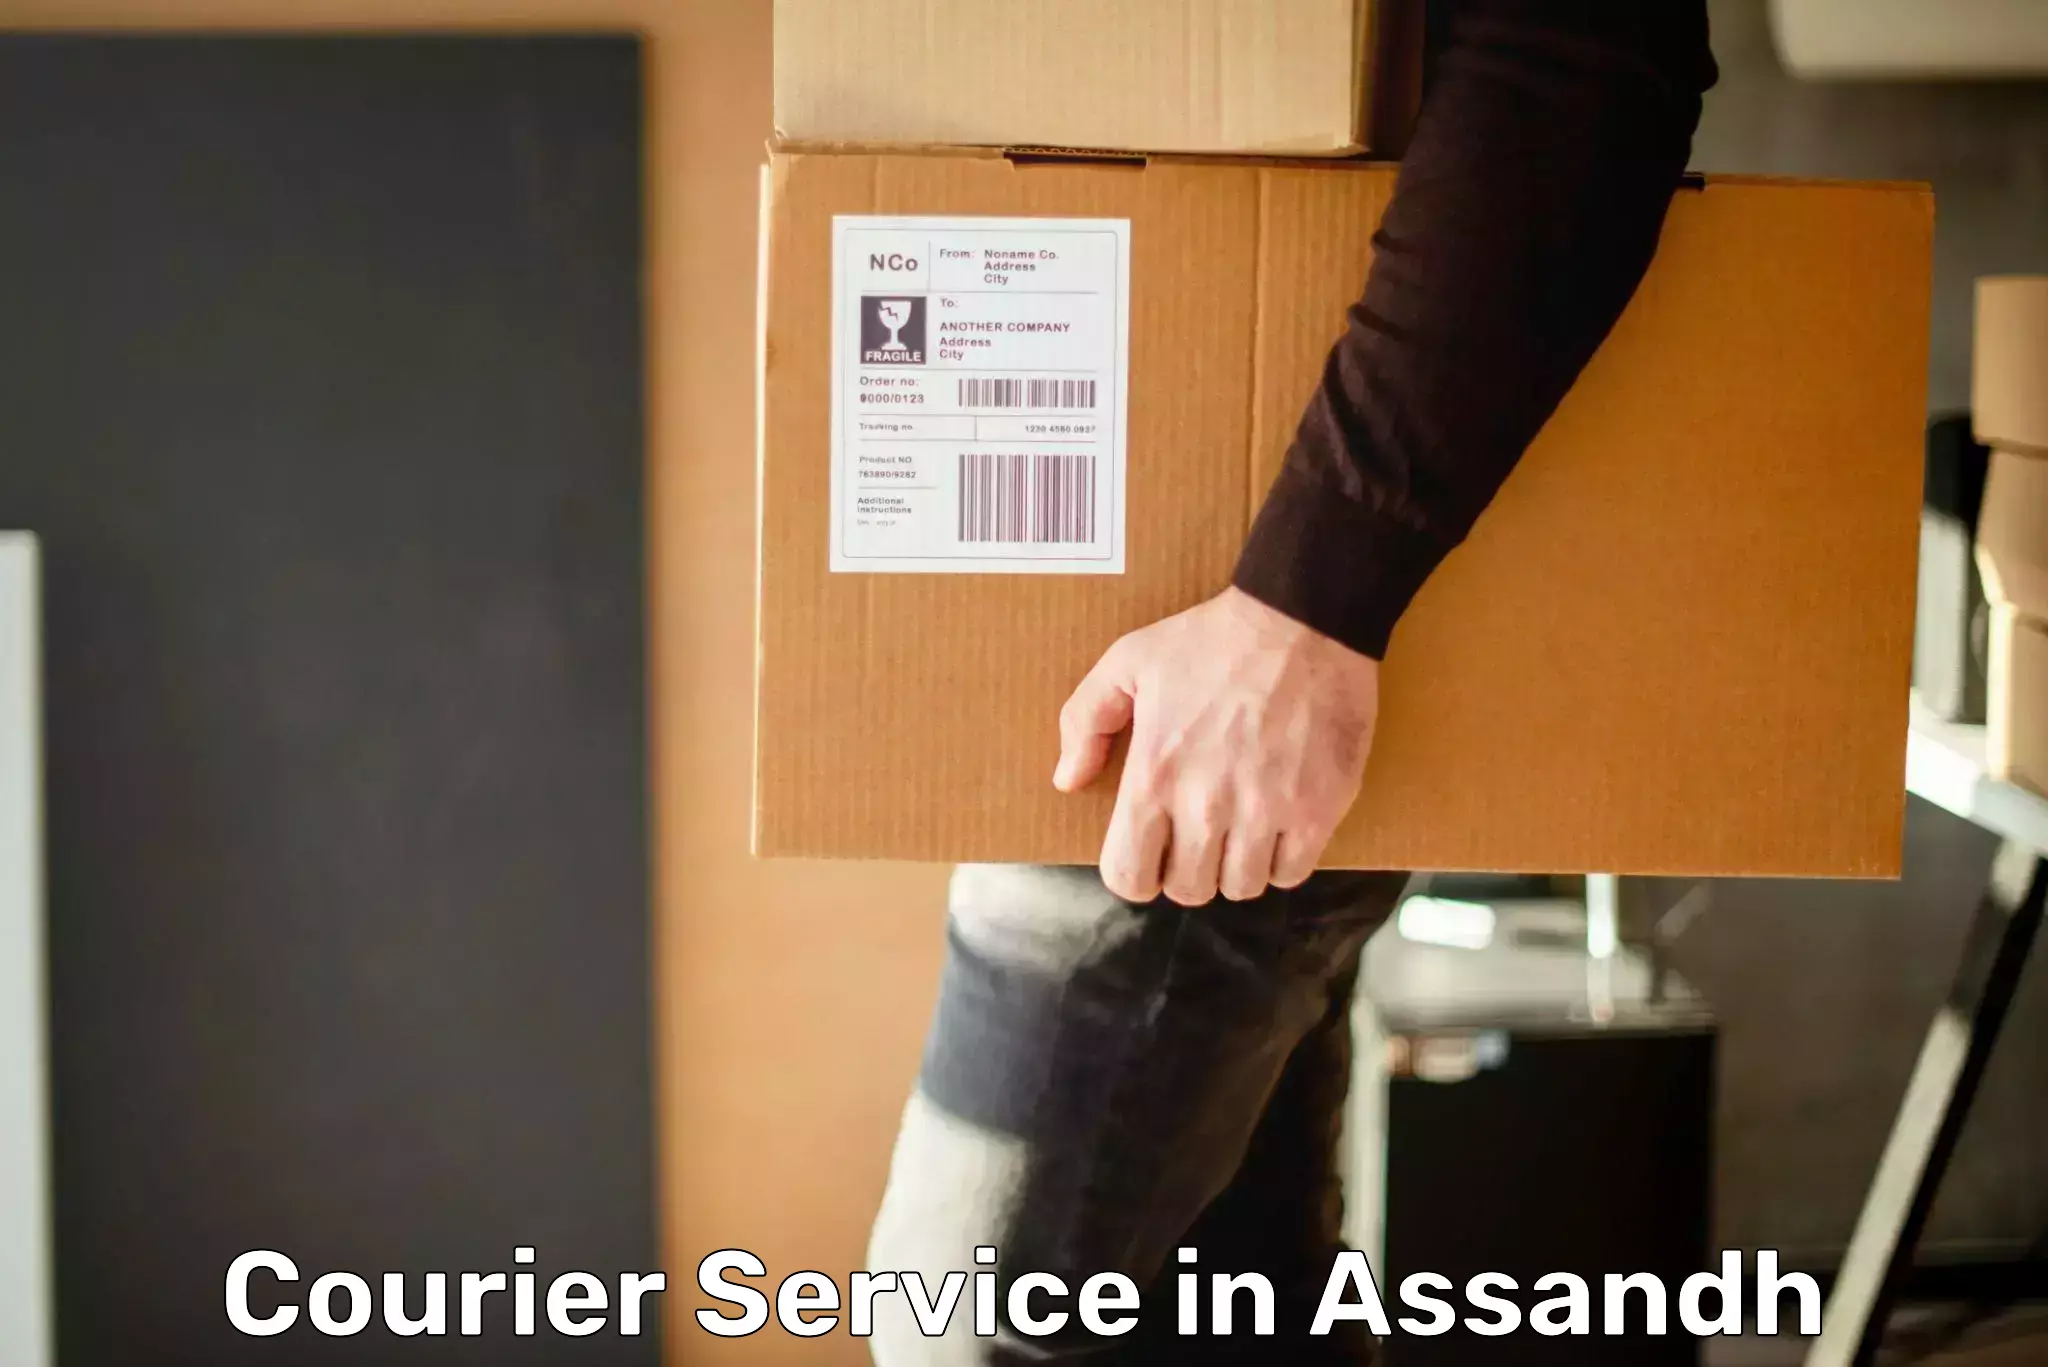 Secure packaging in Assandh